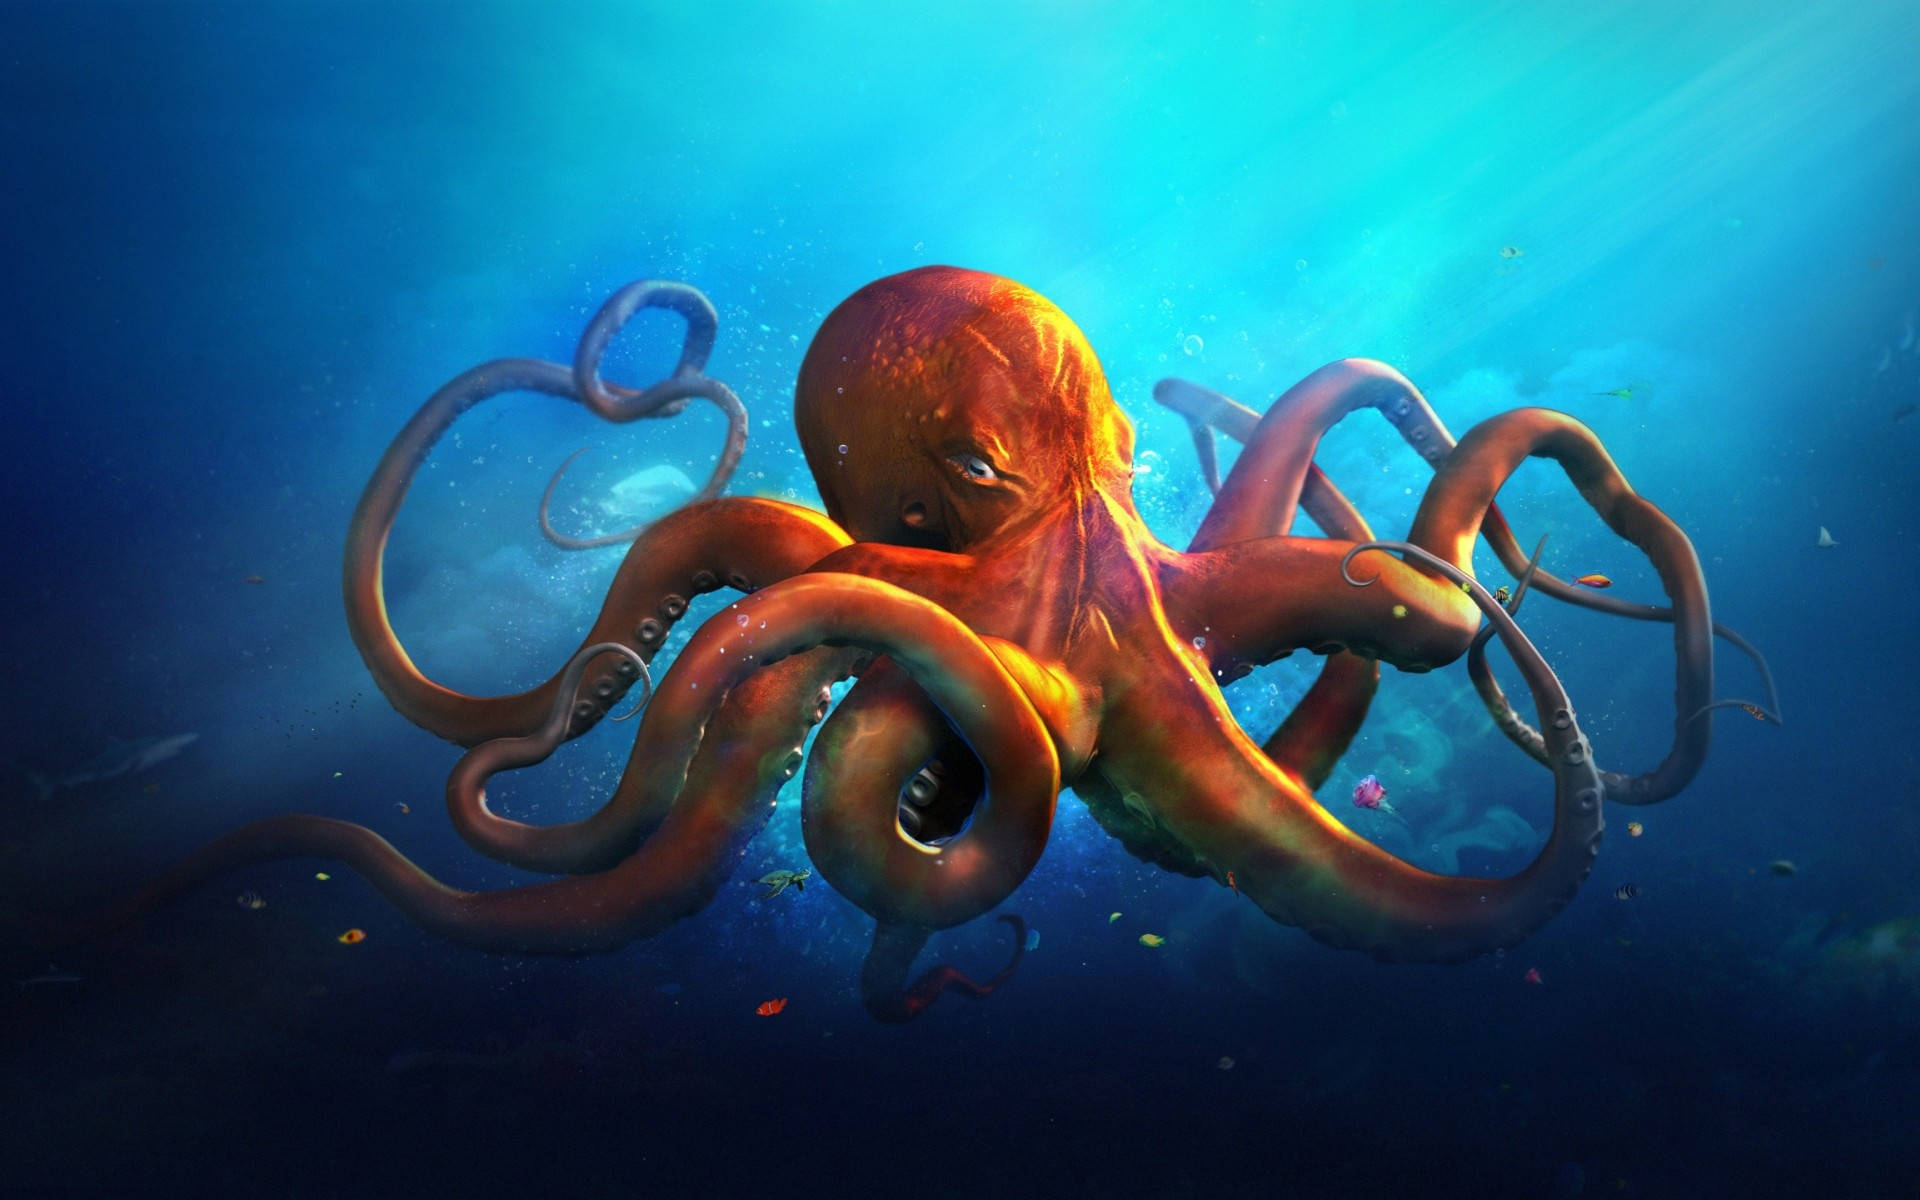 Octopus Wallpaper Images